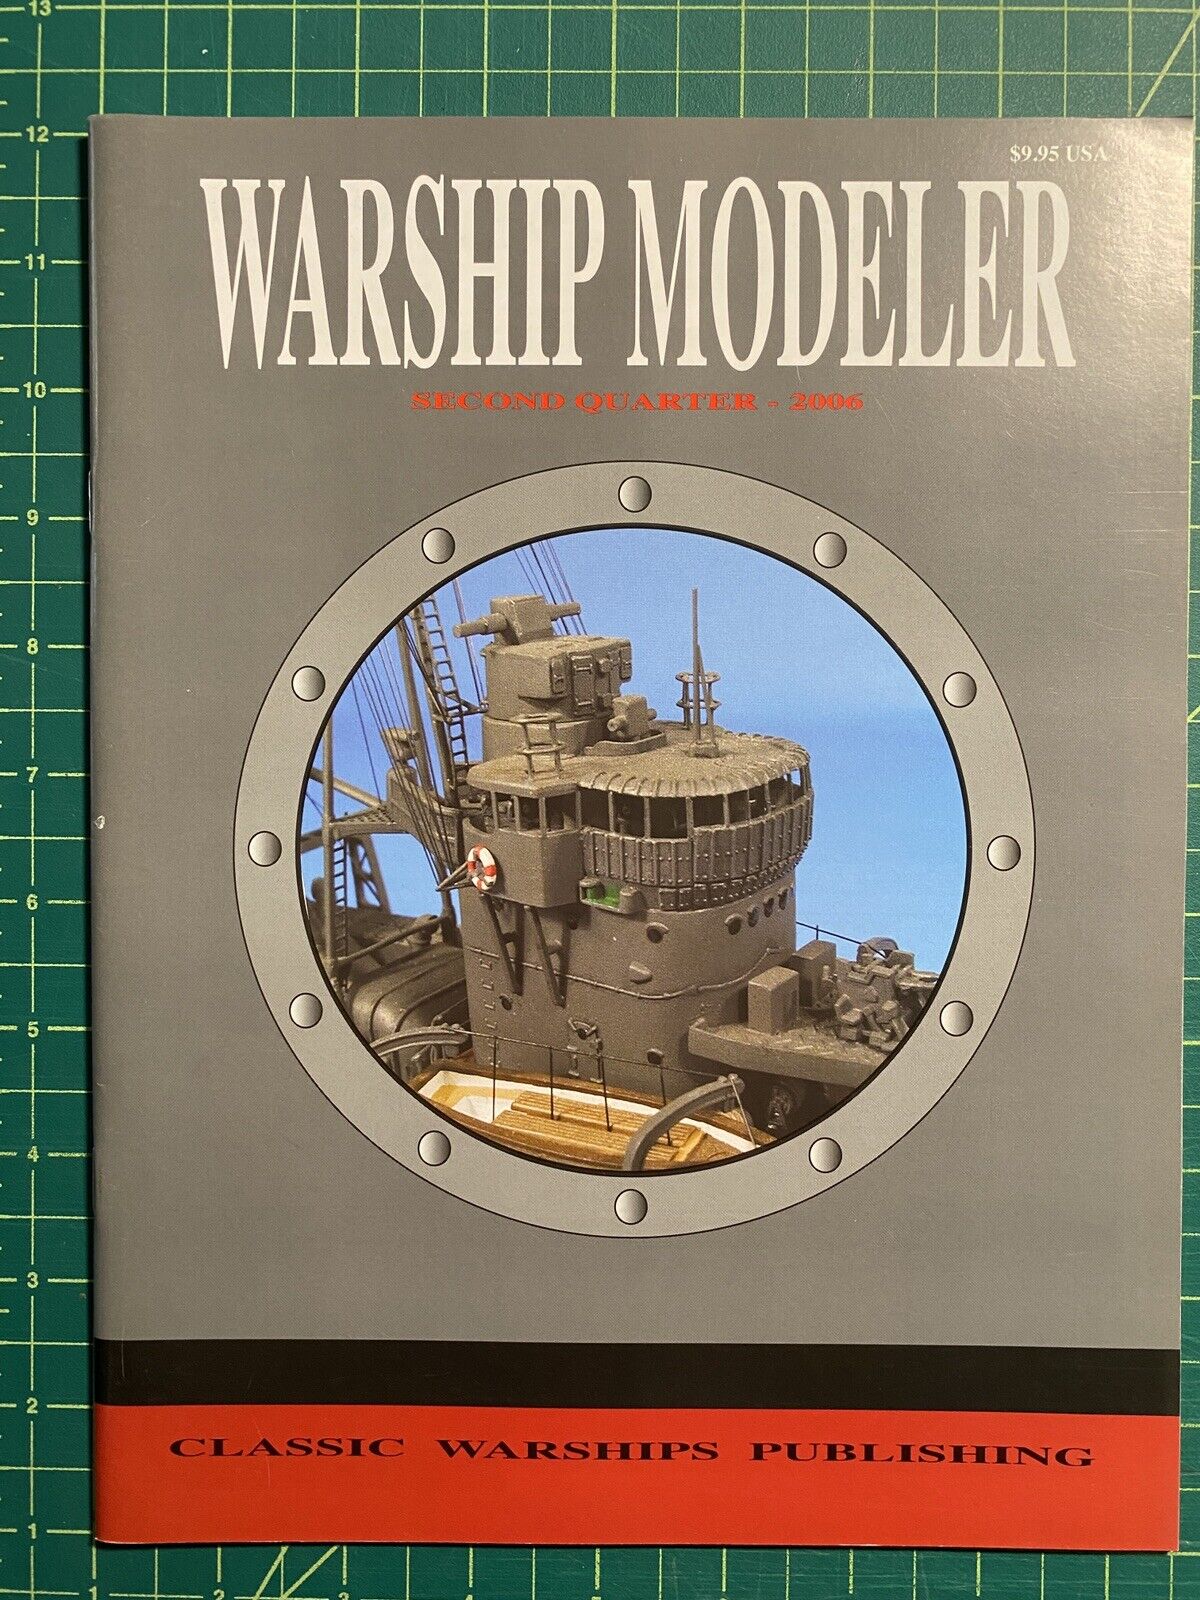 Classic Warships Publishing Warship Modeler 2nd Quarter Issue Model Pictorial